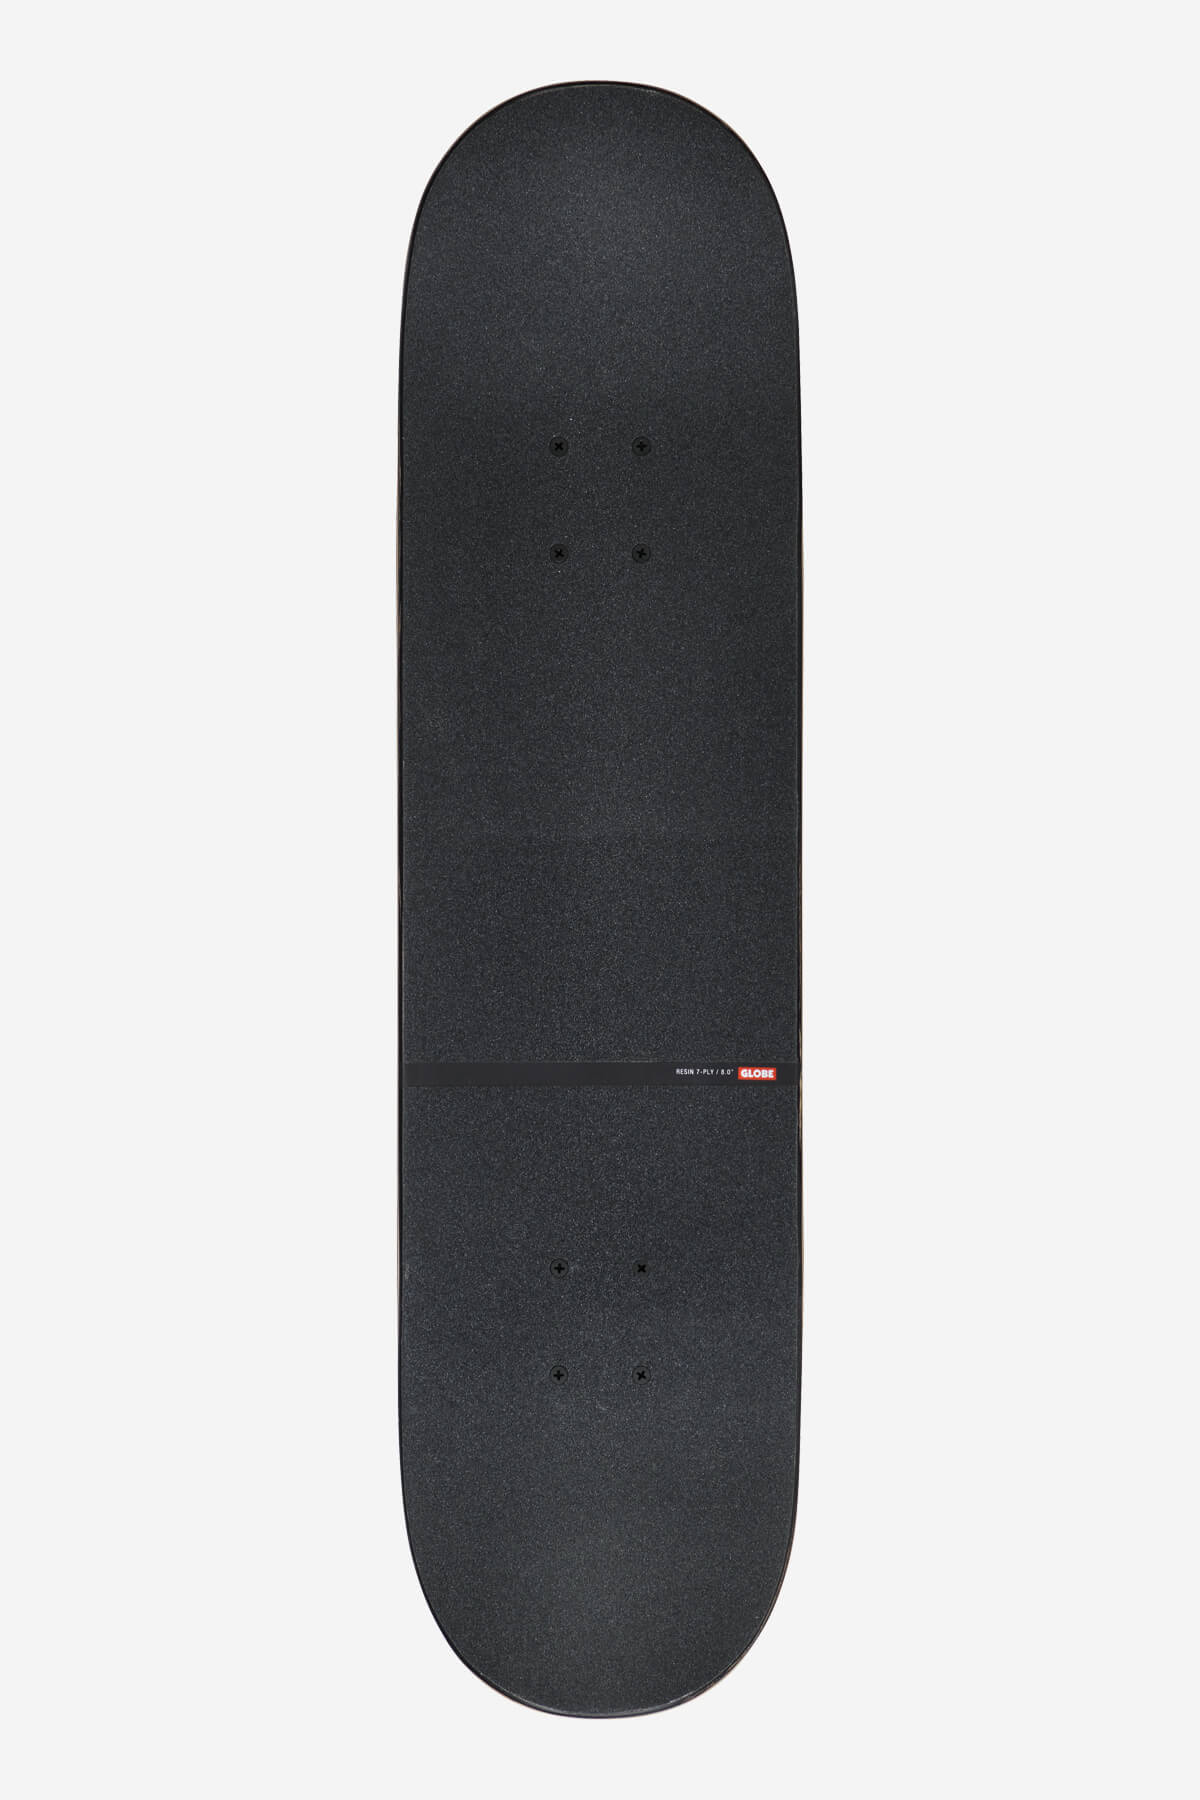 Globe - G1 Lineform 2 - Off White - 8.0" Complete Skateboard